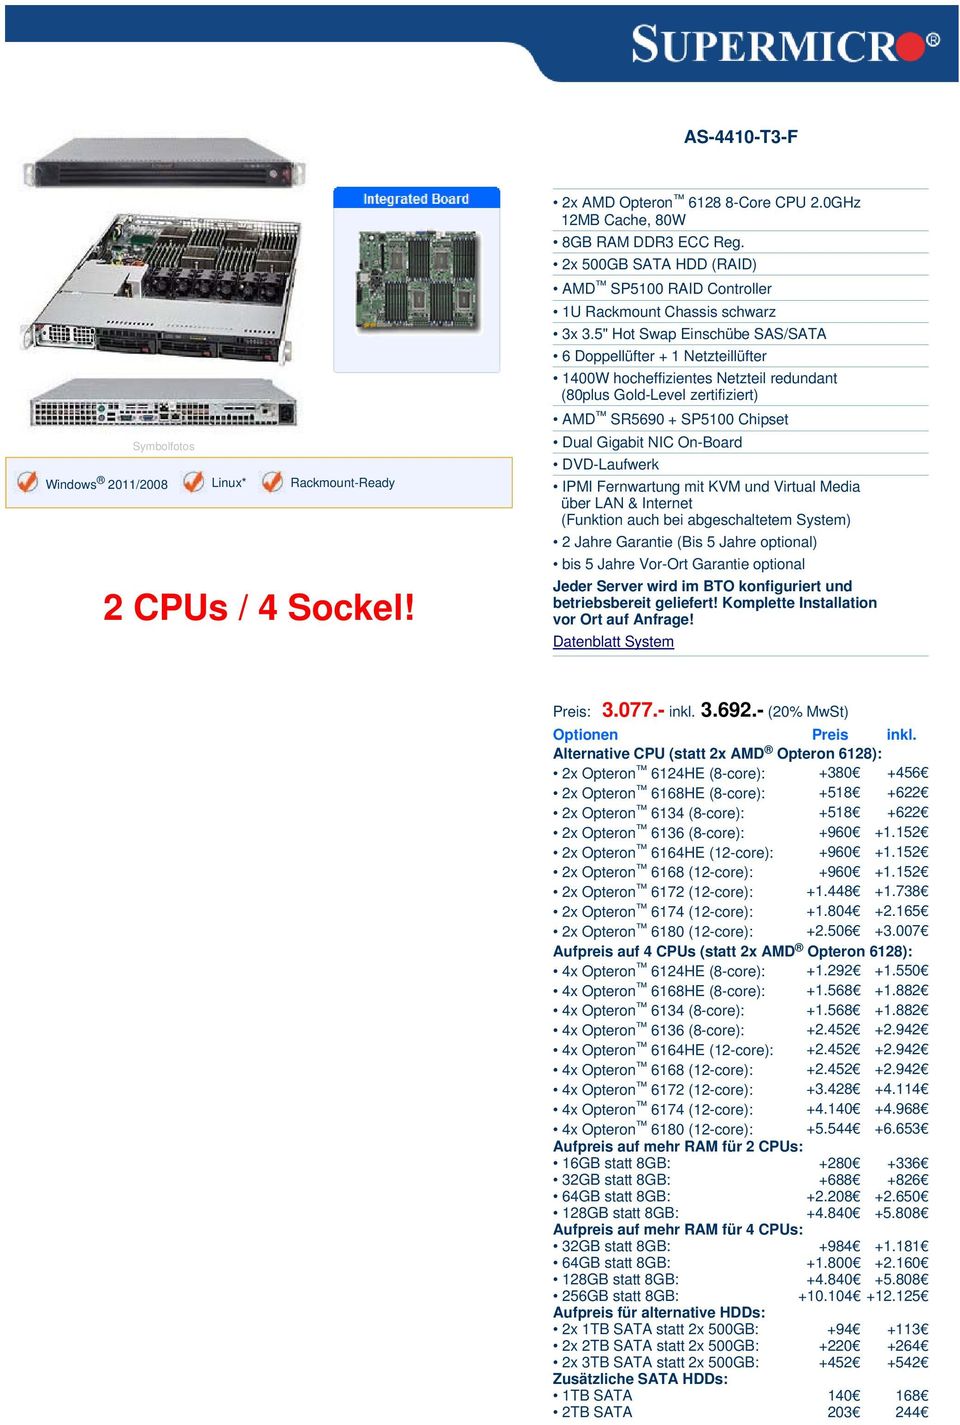 5" Hot Swap Einschübe SAS/SATA 6 Doppellüfter + 1 Netzteillüfter 1400W hocheffizientes Netzteil redundant Dual Gigabit NIC On-Board DVD-Laufwerk Preis: 3.077.- inkl. 3.692.